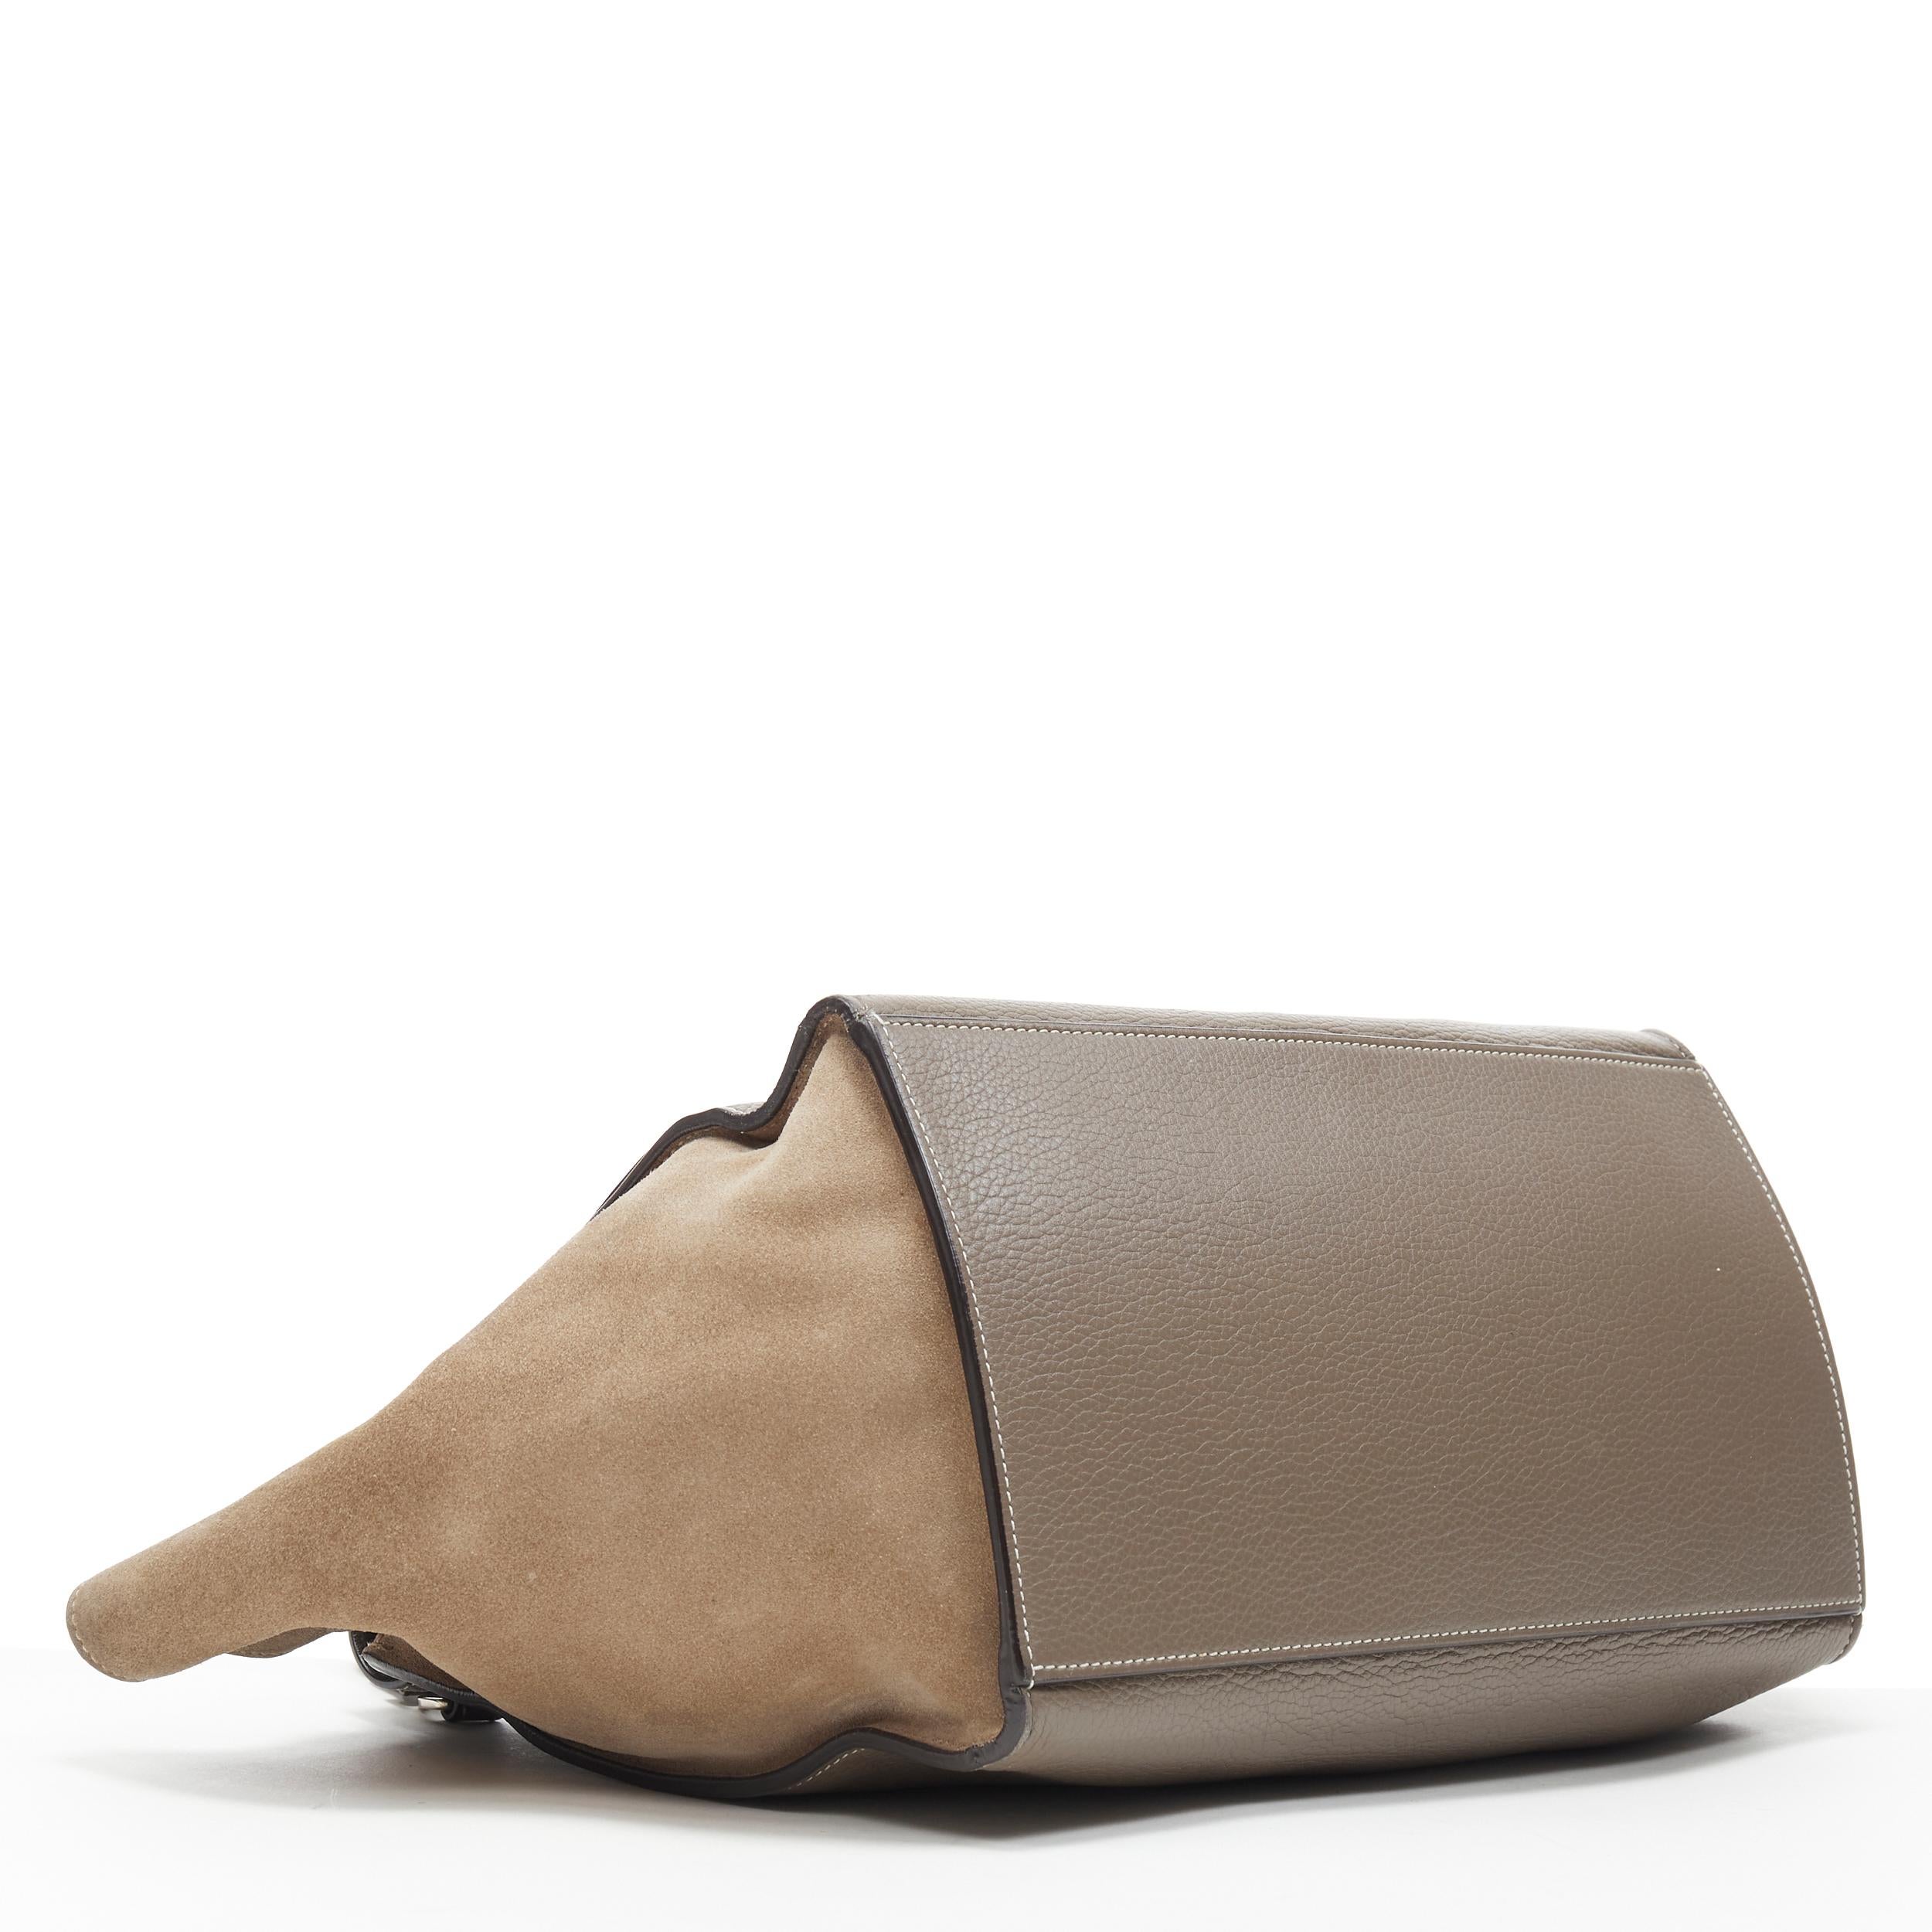 OLD CELINE Trapeze grey leather suede flap top handle flap satchel shoulder bag For Sale 1